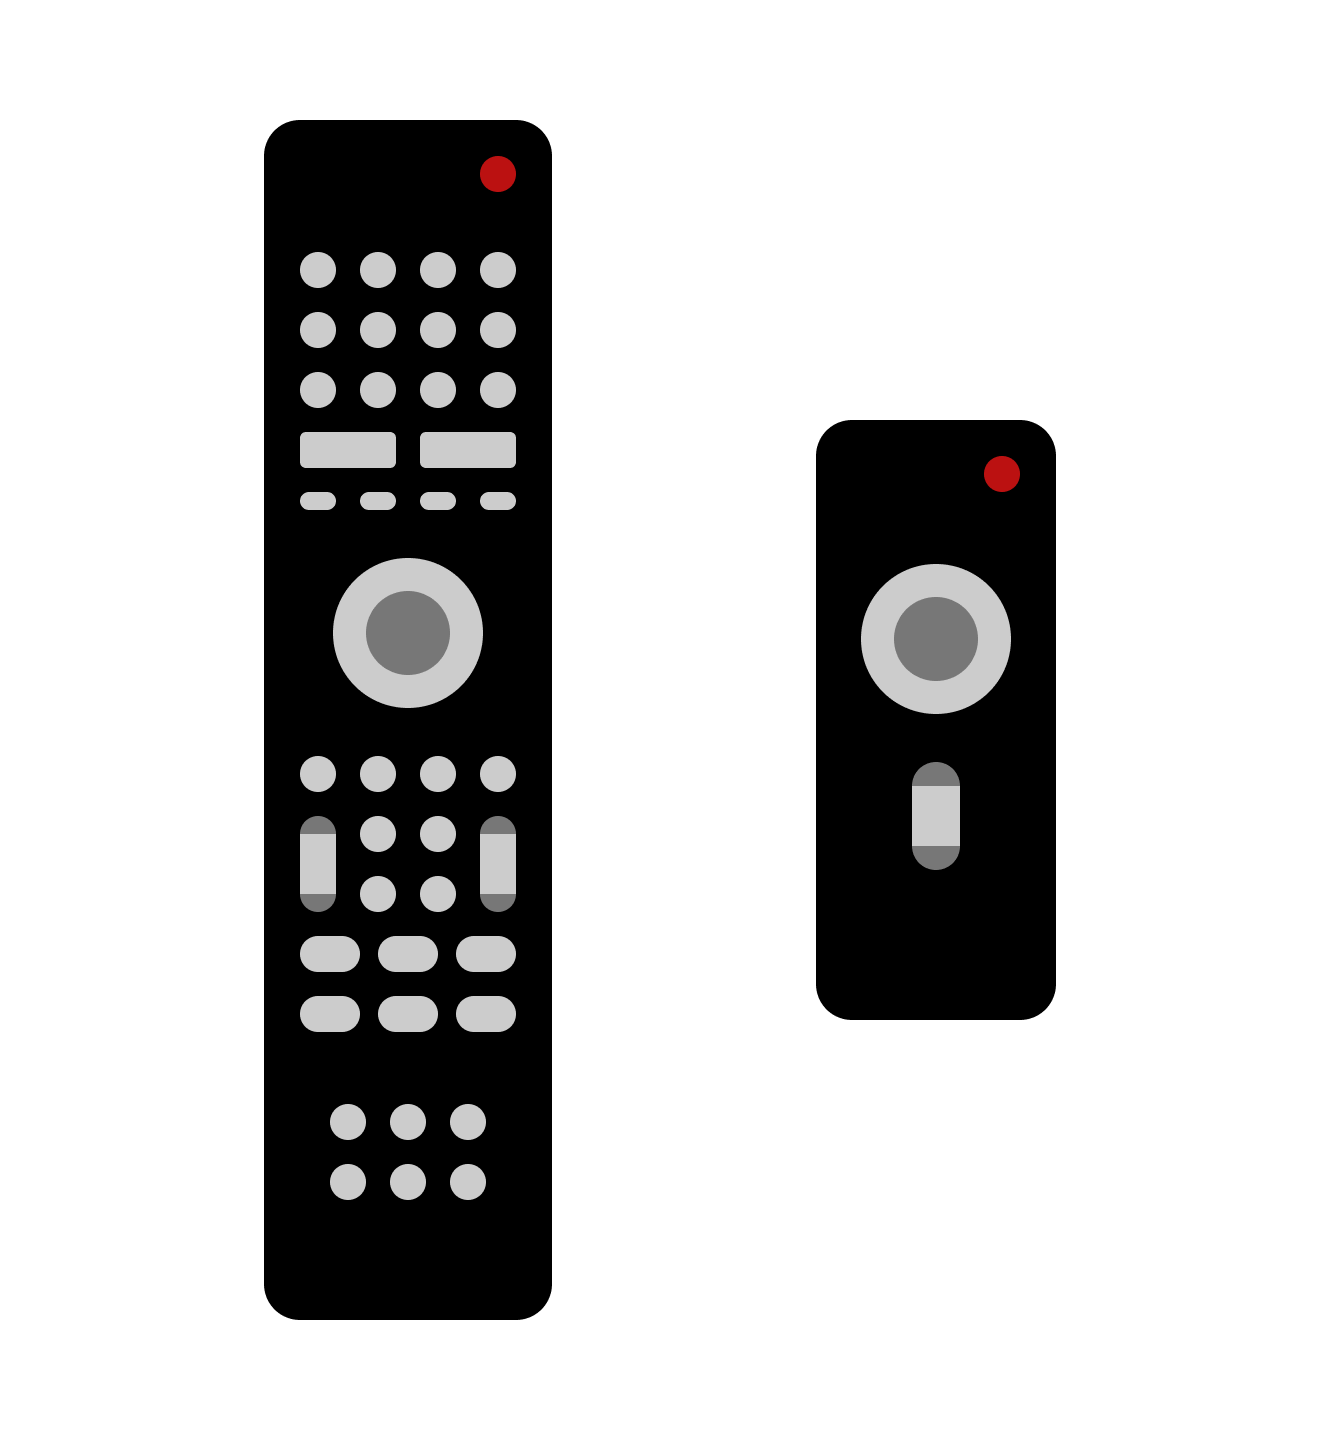 Illustration of TV remote controls